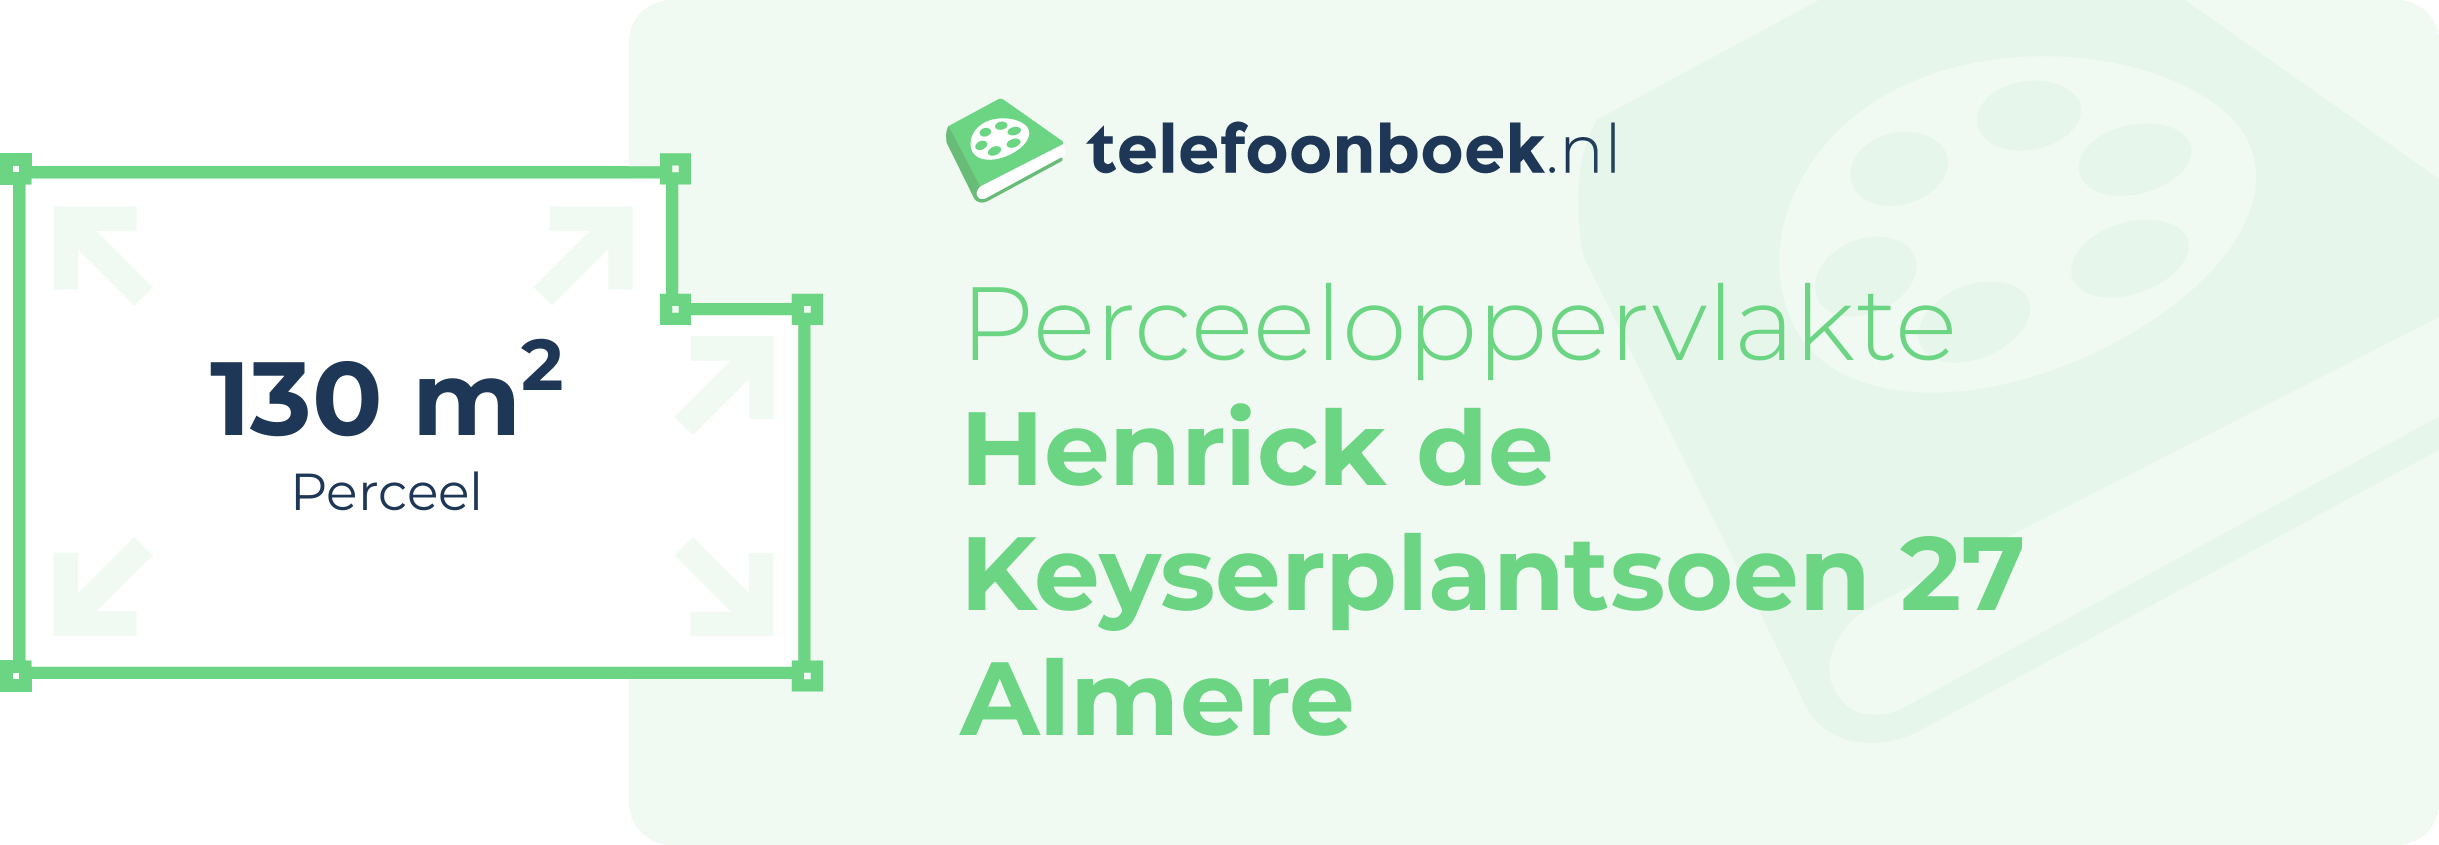 Perceeloppervlakte Henrick De Keyserplantsoen 27 Almere